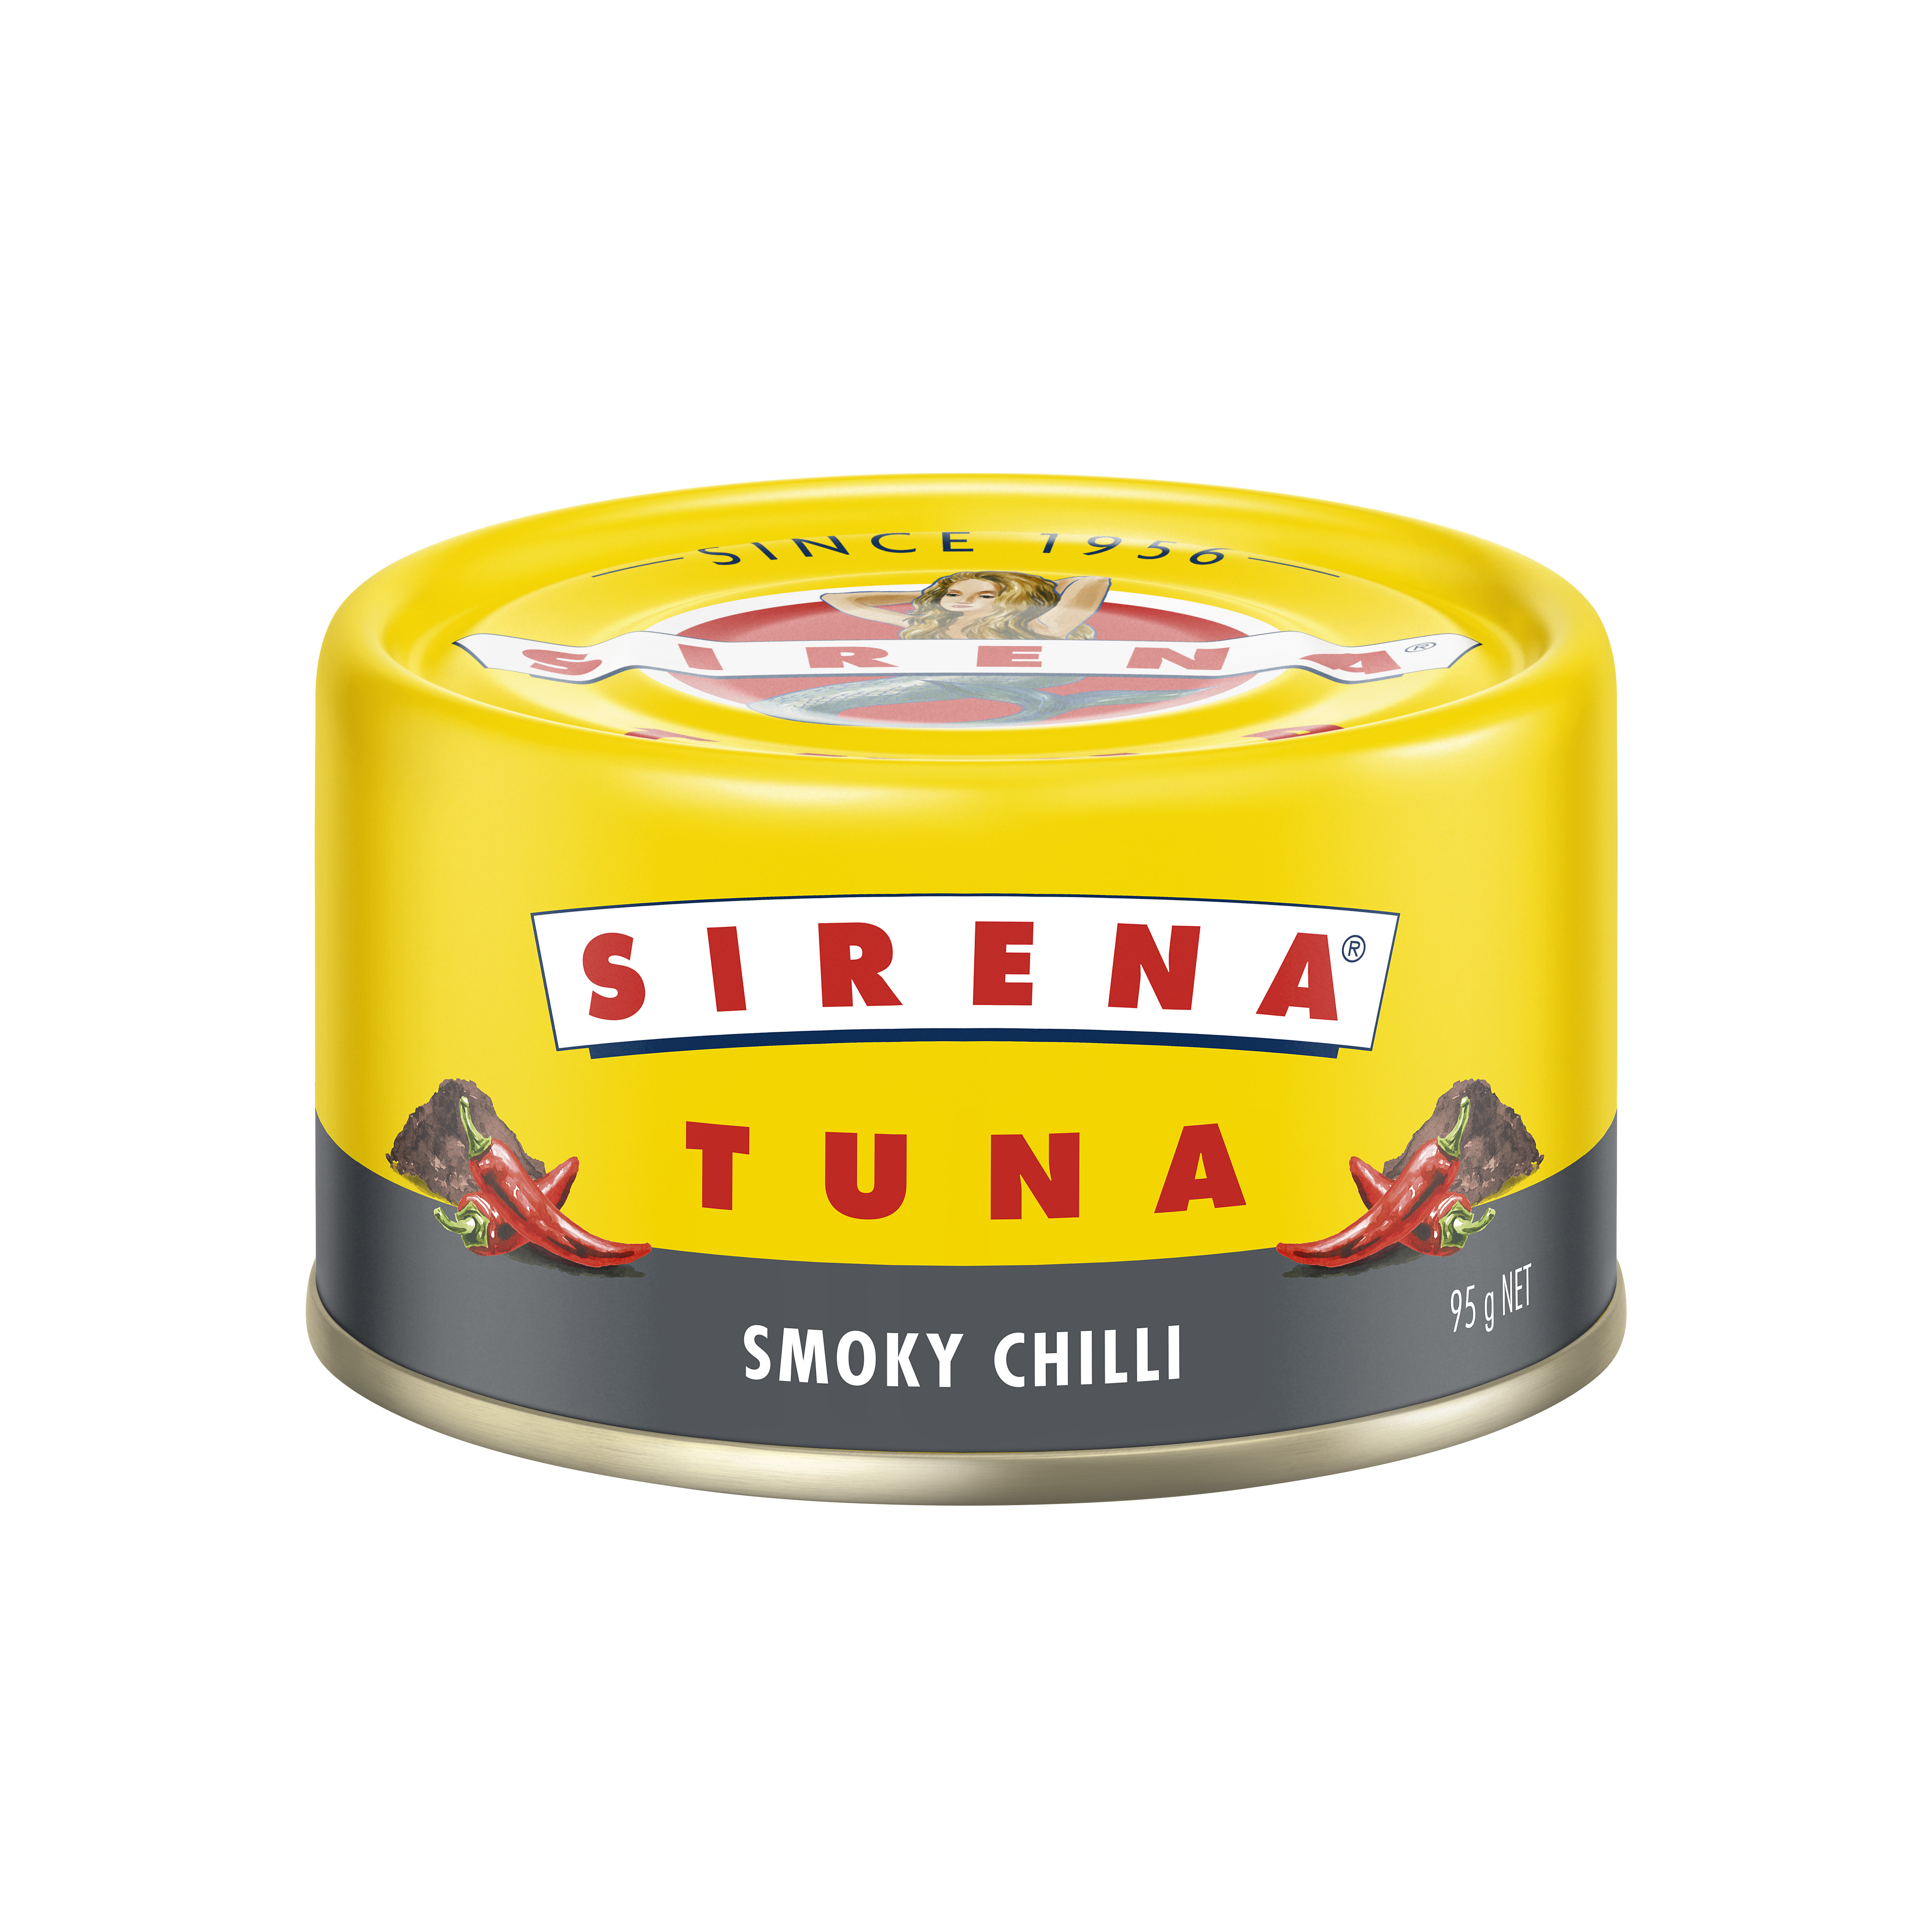 Sirena Tuna Smoky Chilli can image